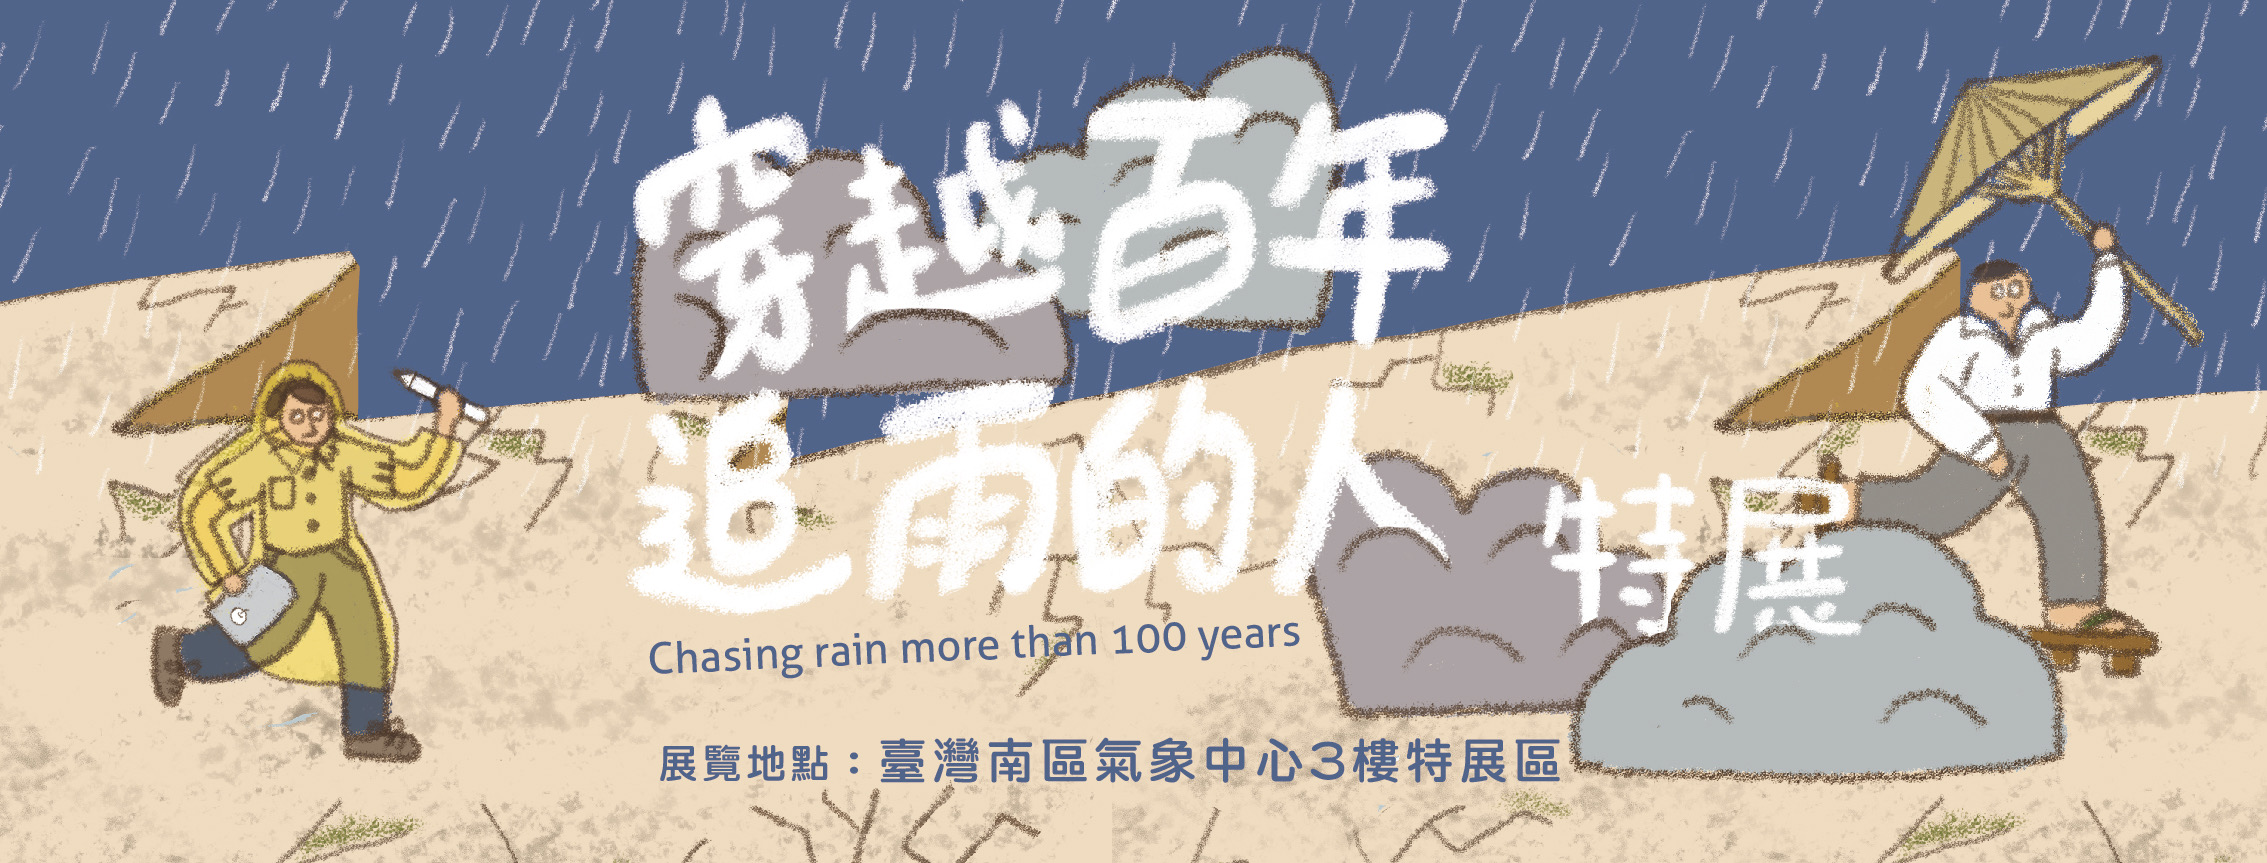 Chasing rain more than 100 years